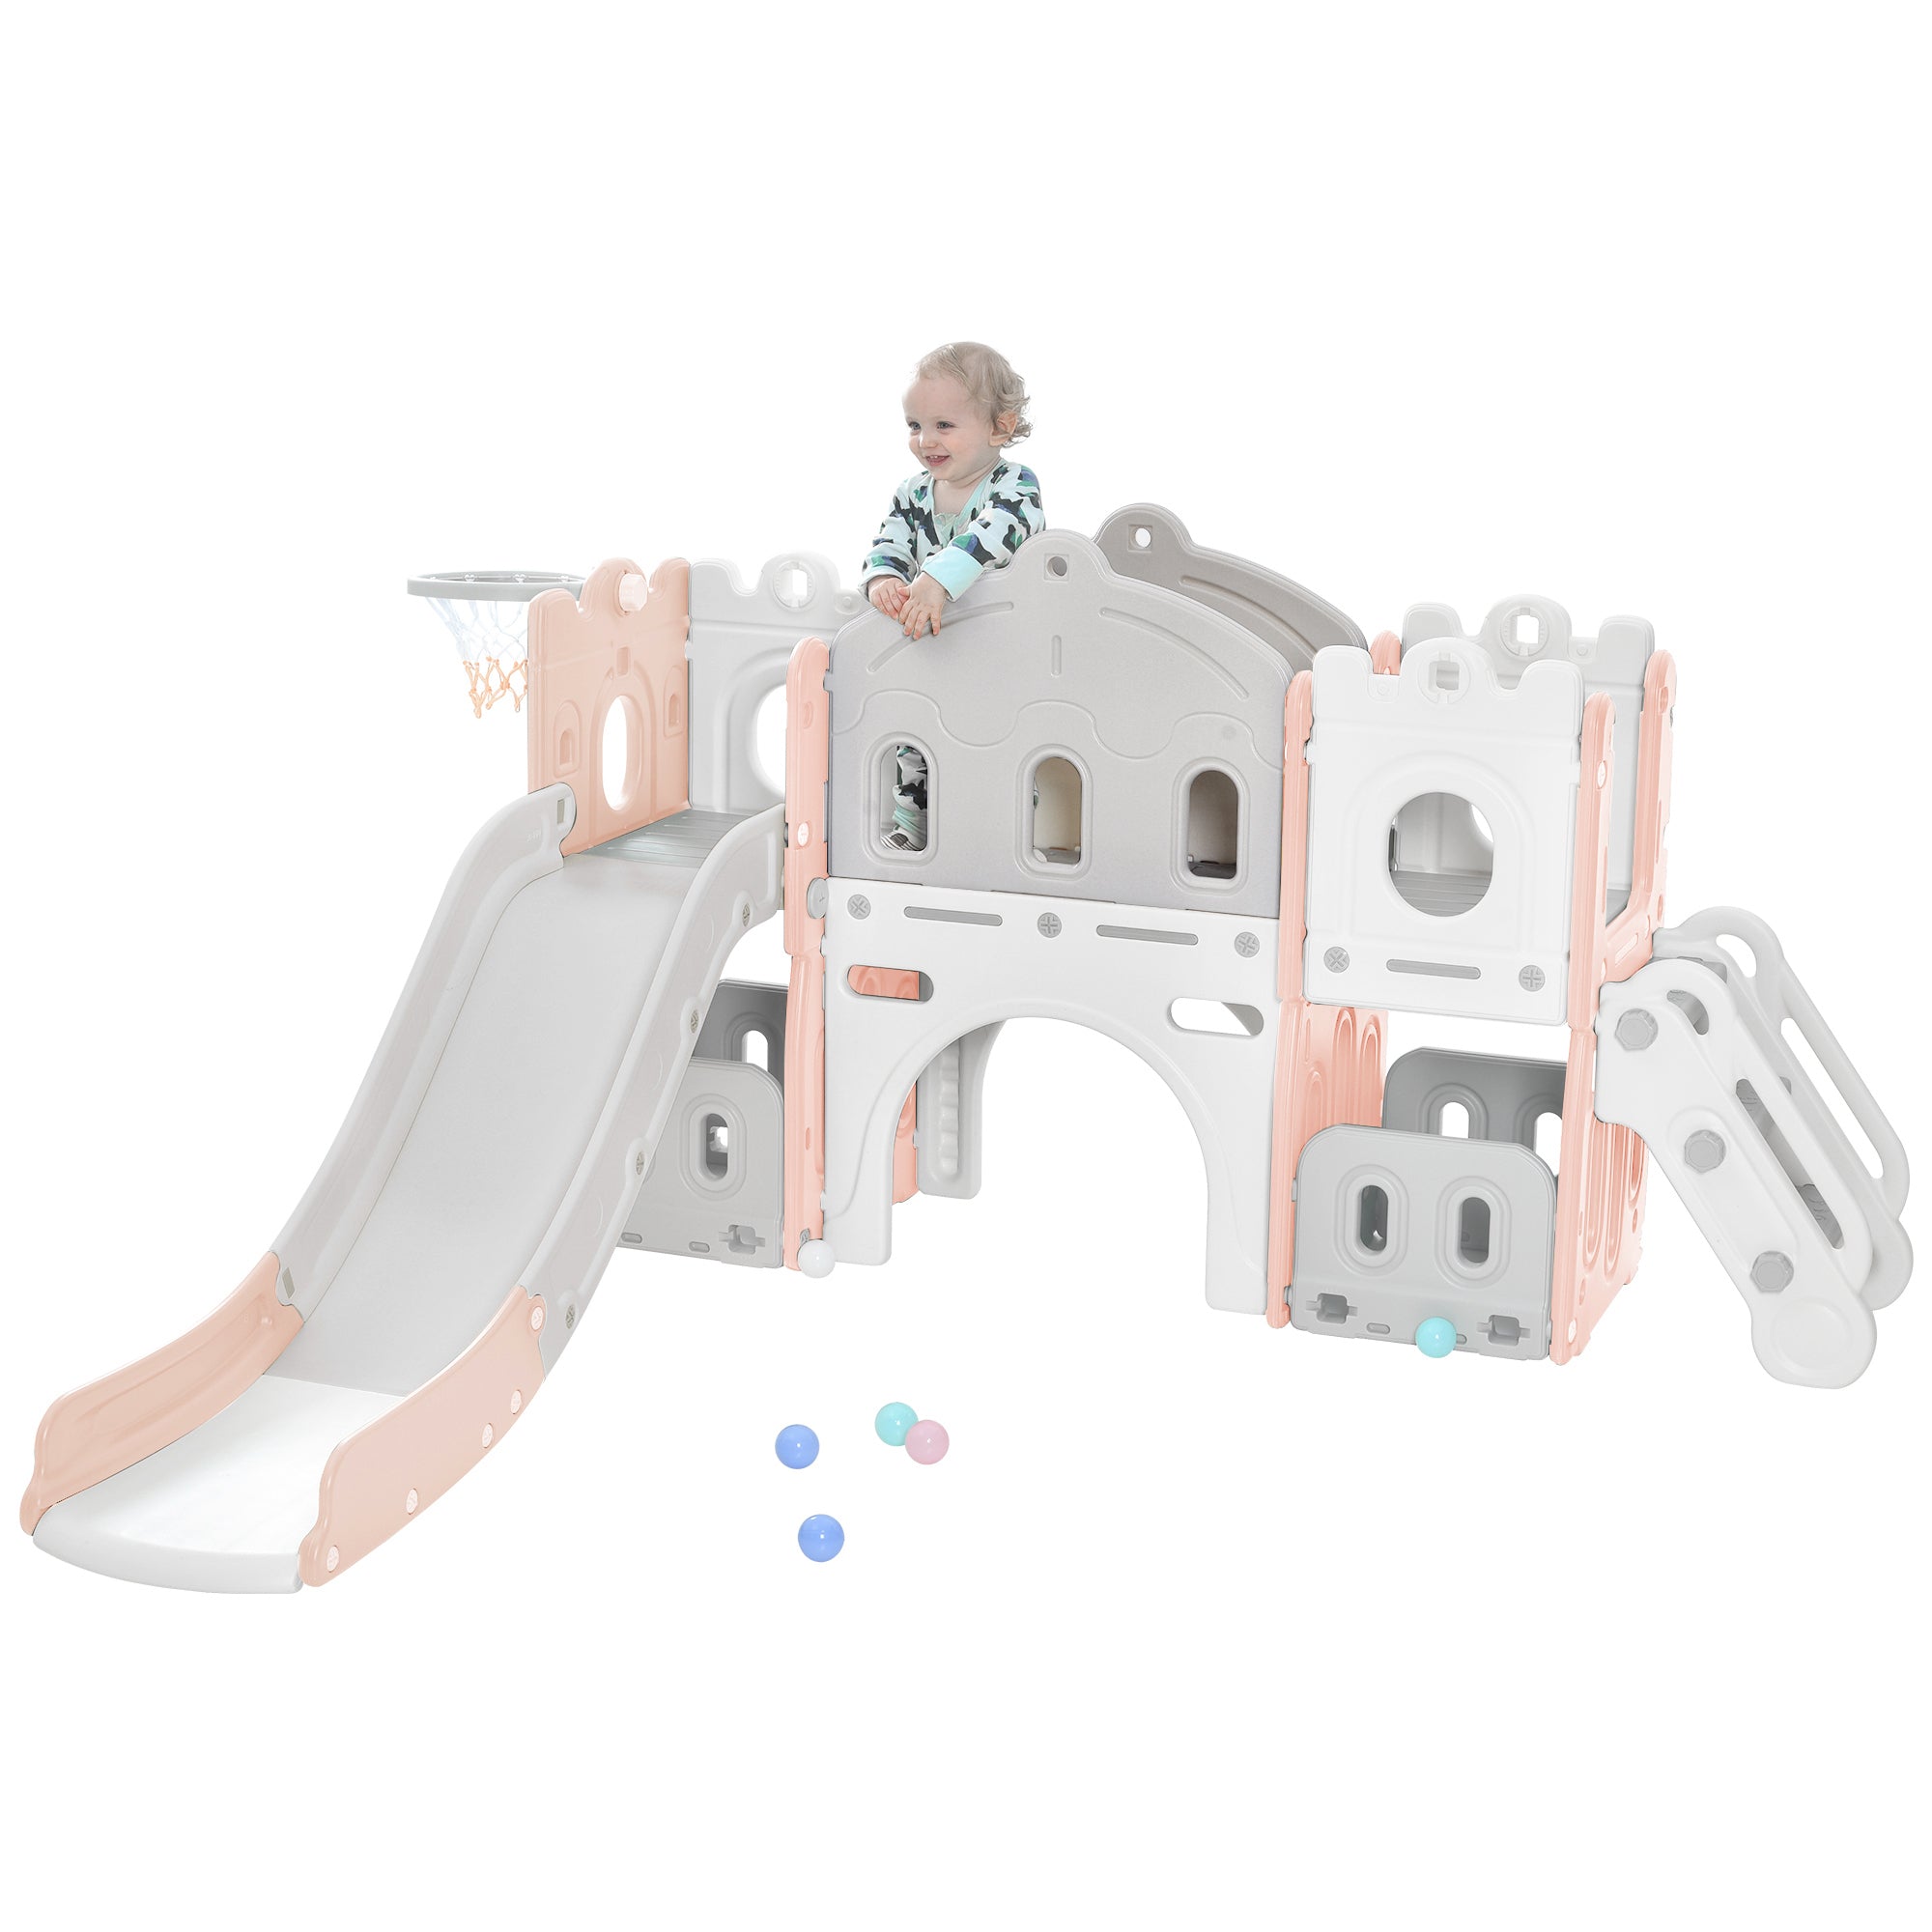 Kids Slide Playset Structure (Pink)